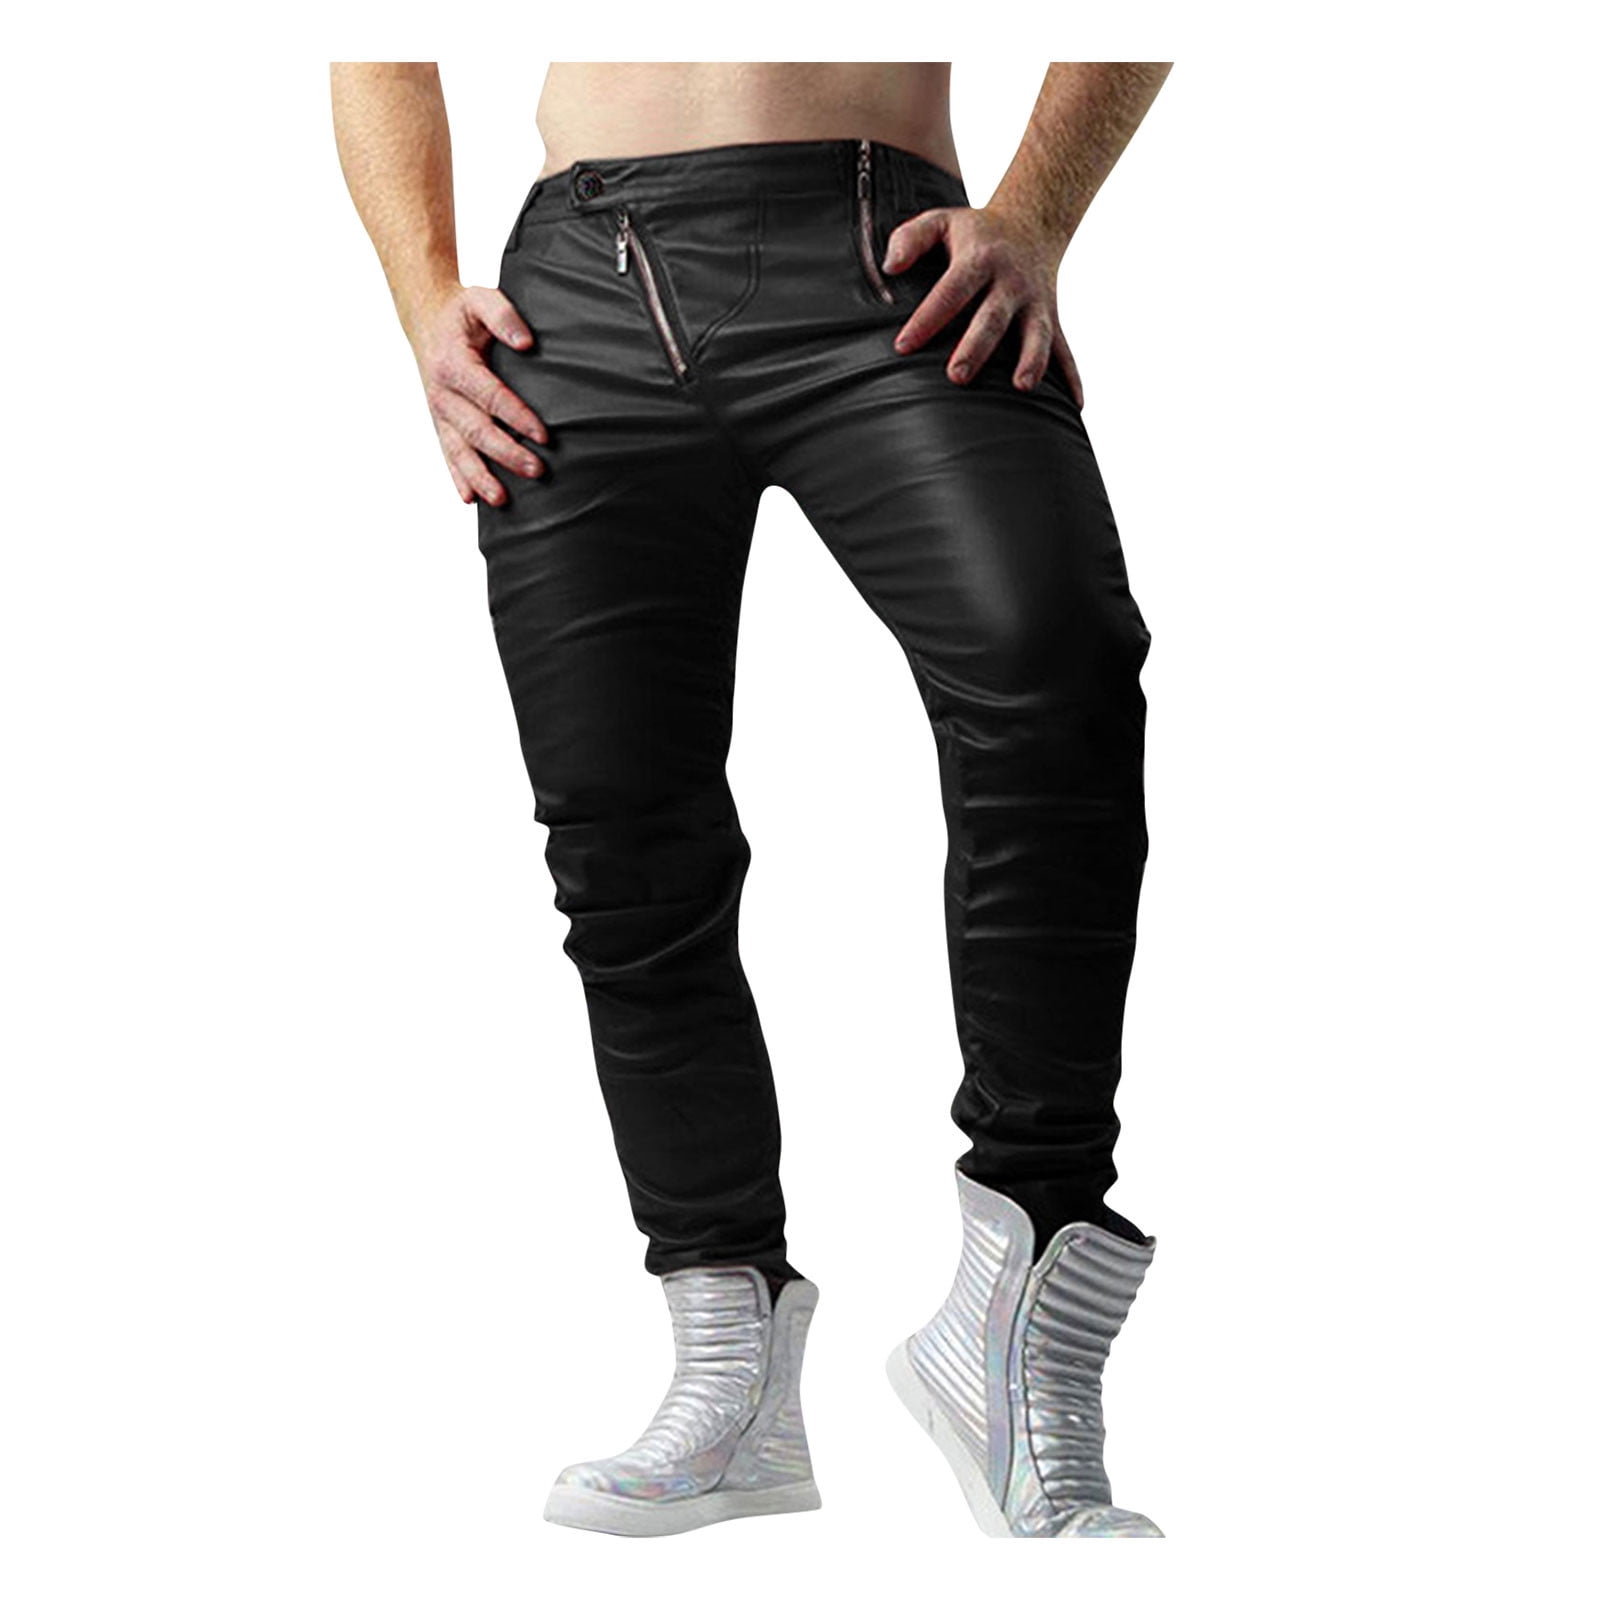 Buy Ecko Function Men's Duster Pant, Black, Medium at